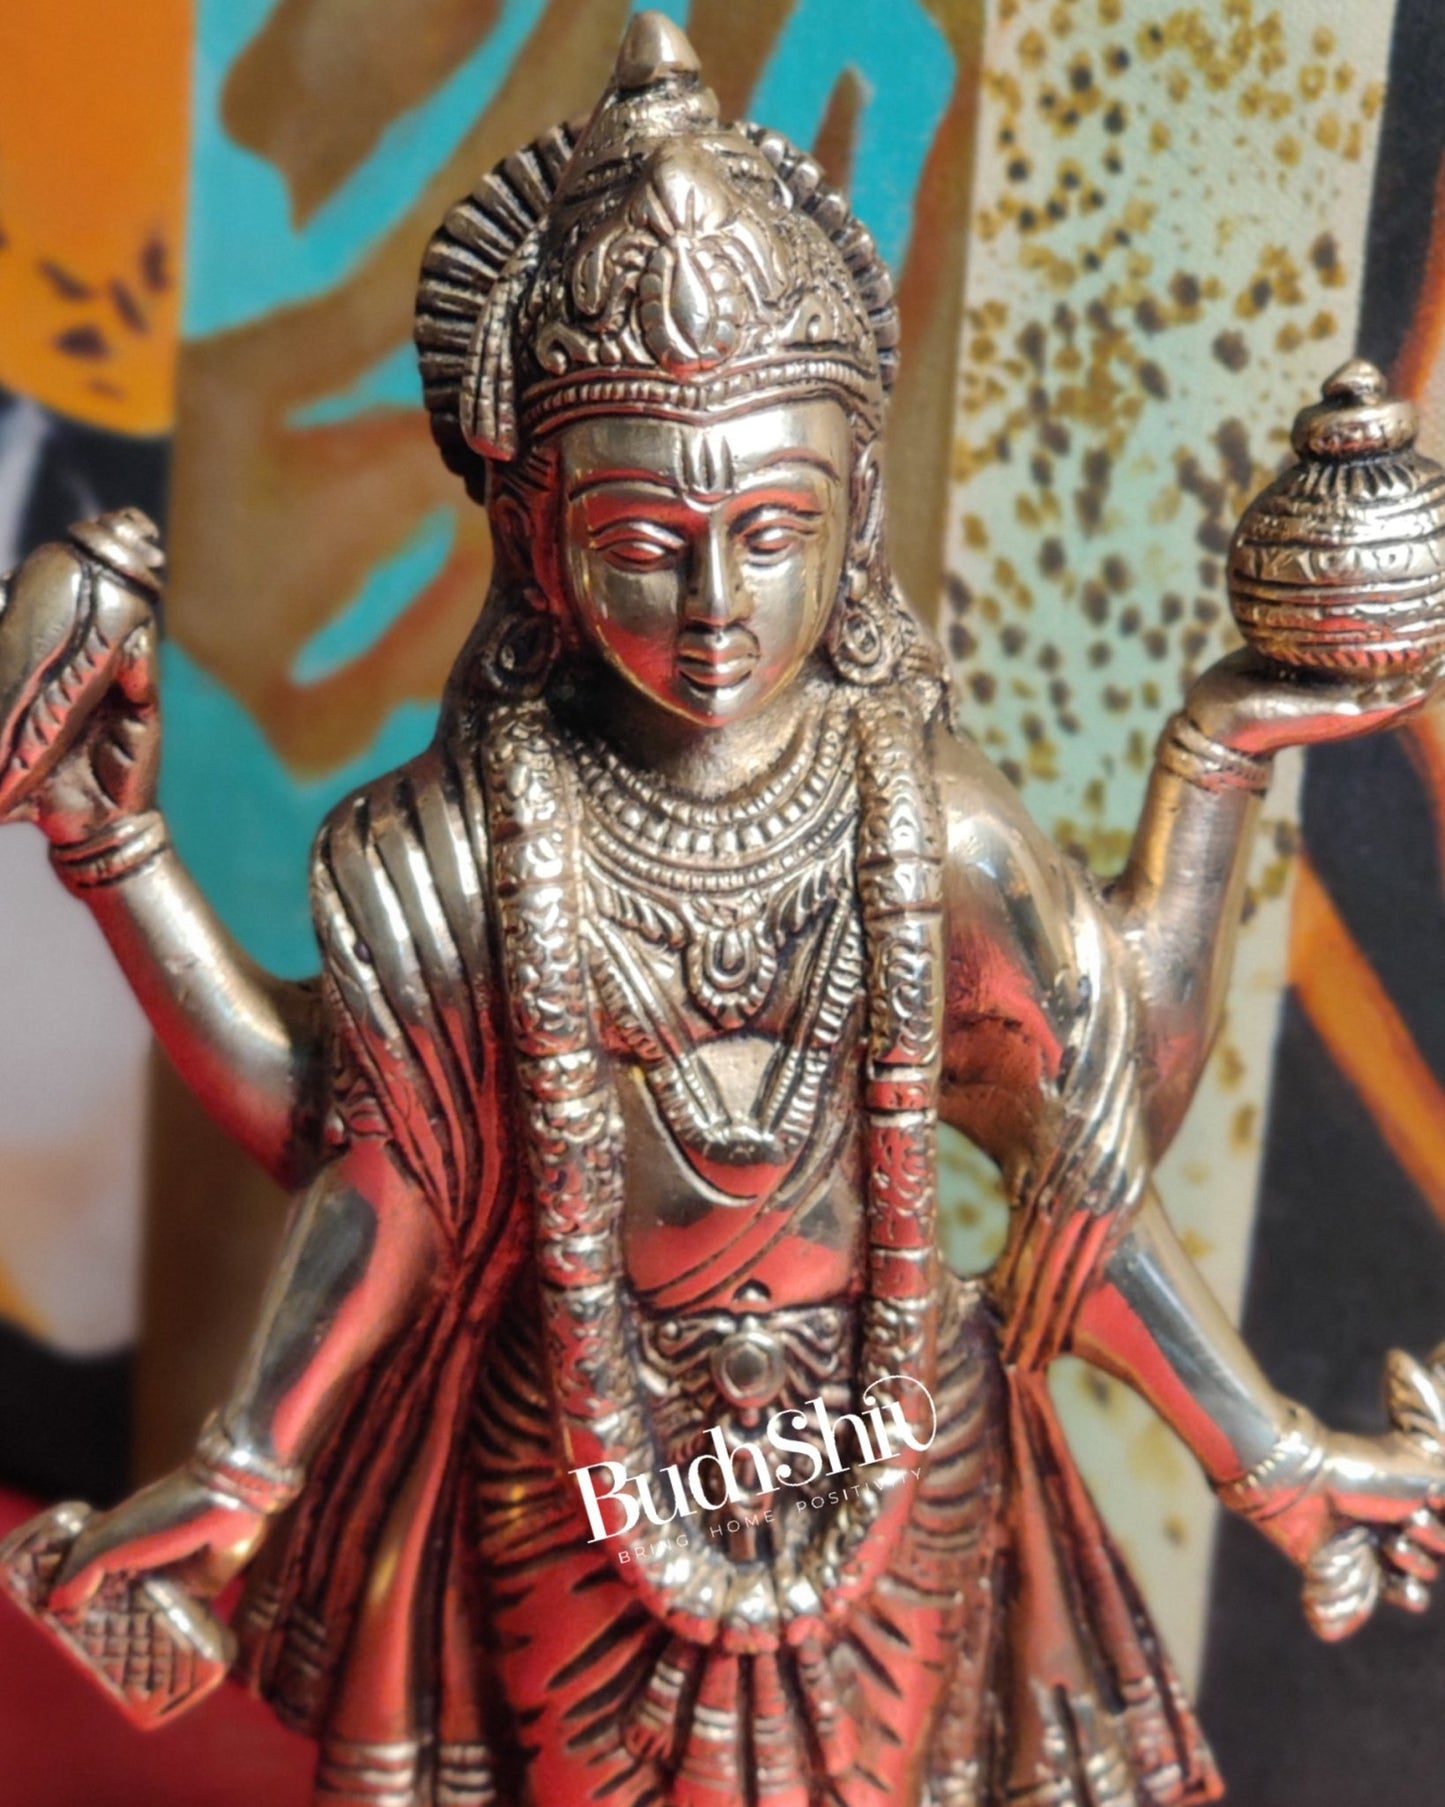 Handcrafted Brass Statue of Lord Dhanvantari, the God of Ayurveda | Fine Craftsmanship10" - Budhshiv.com